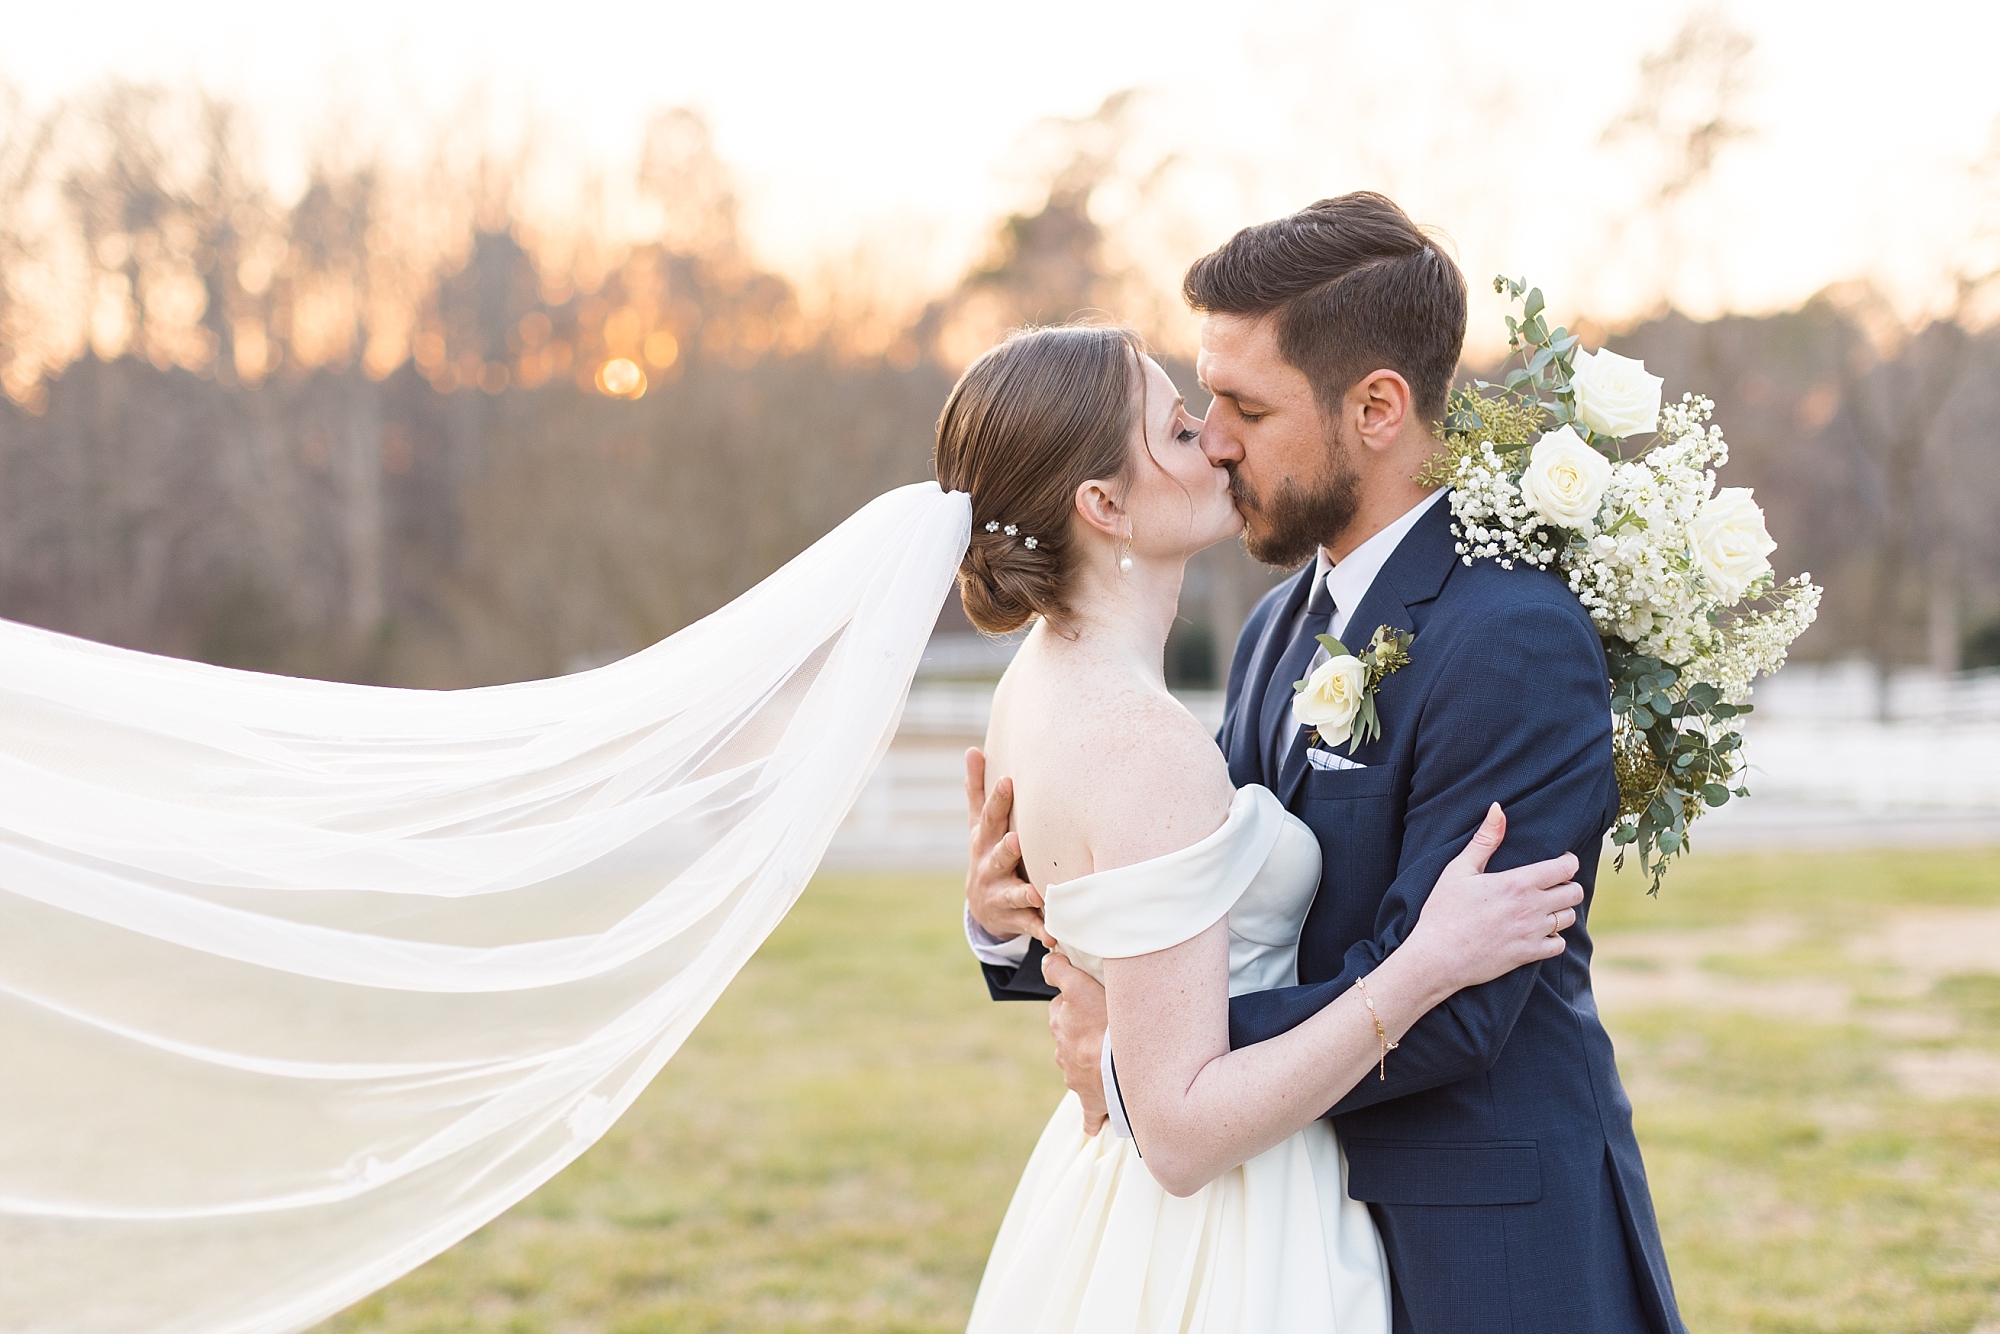 Winter wedding at Seven Paths Manor in North Carolina | Sarah Hinckley Photography | Raleigh Wedding Photographer